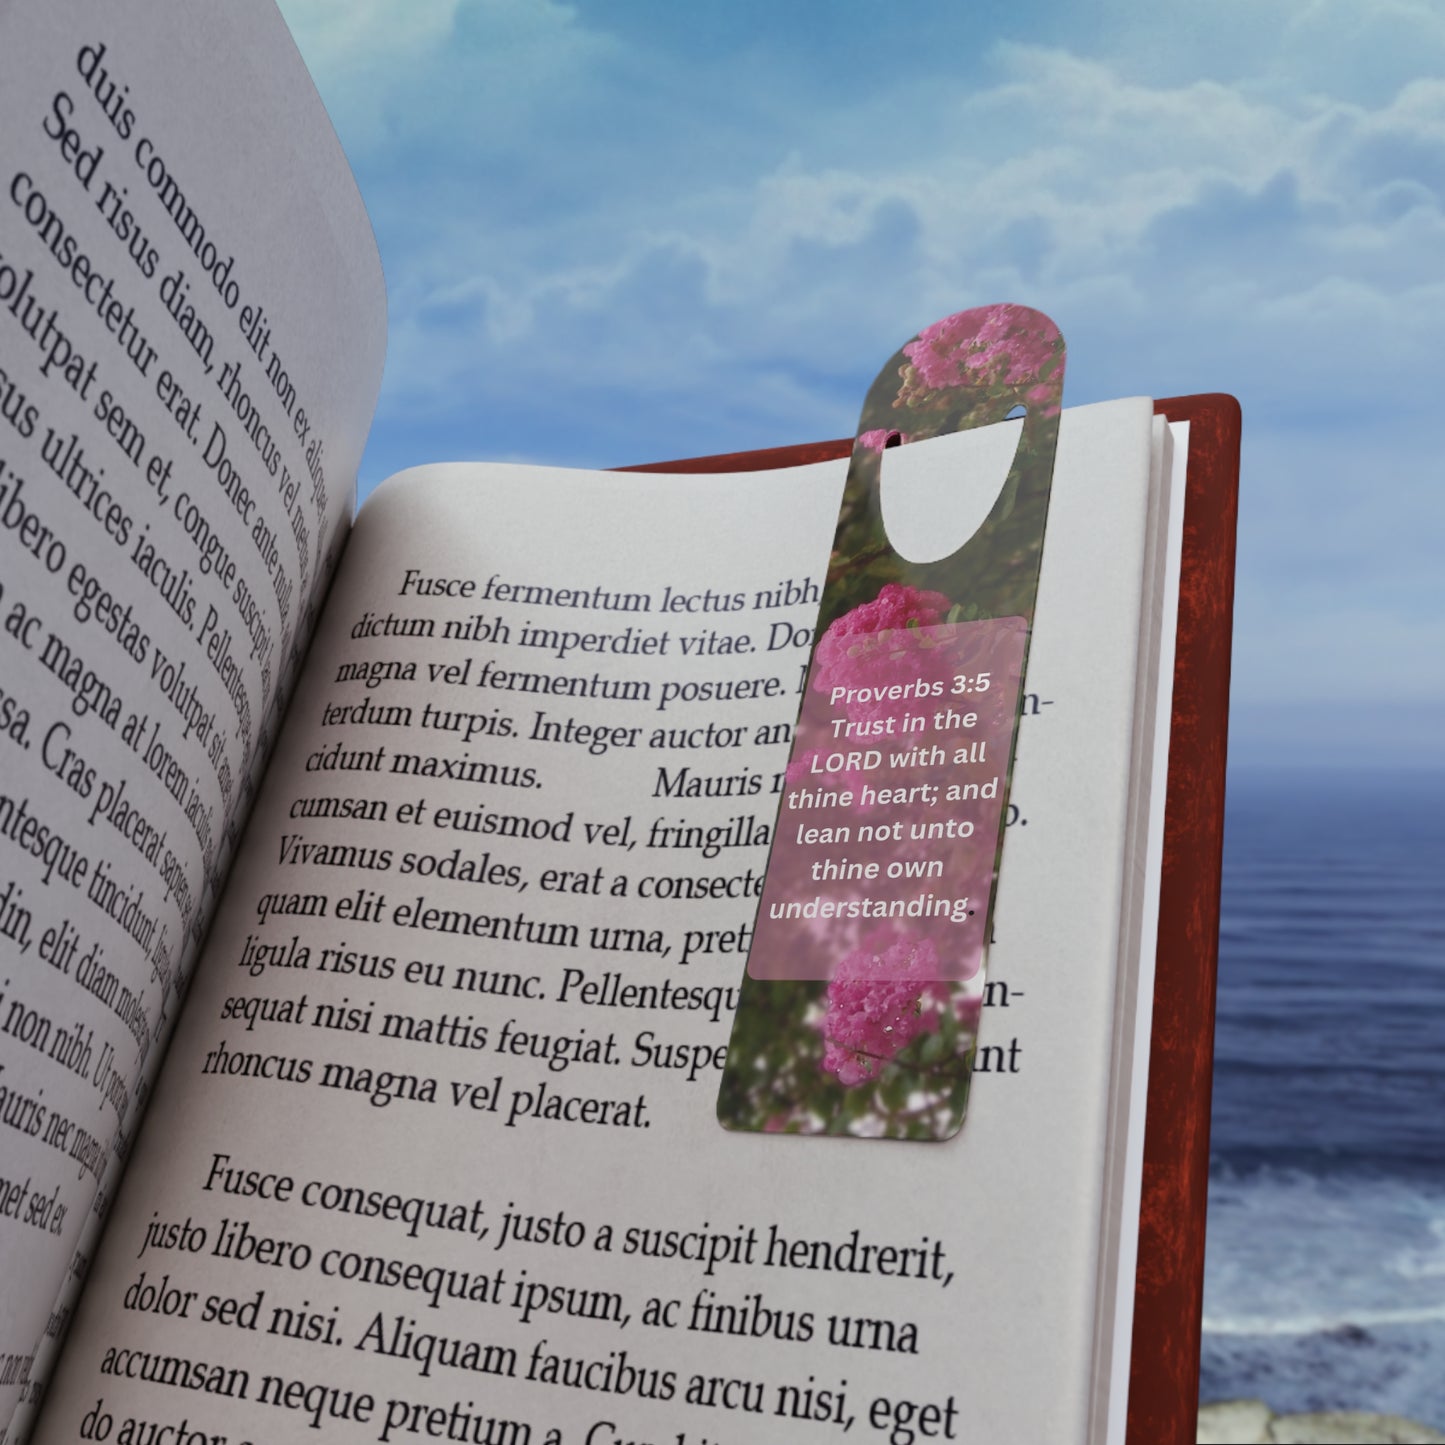 Pink Crape Myrtle | Bookmark